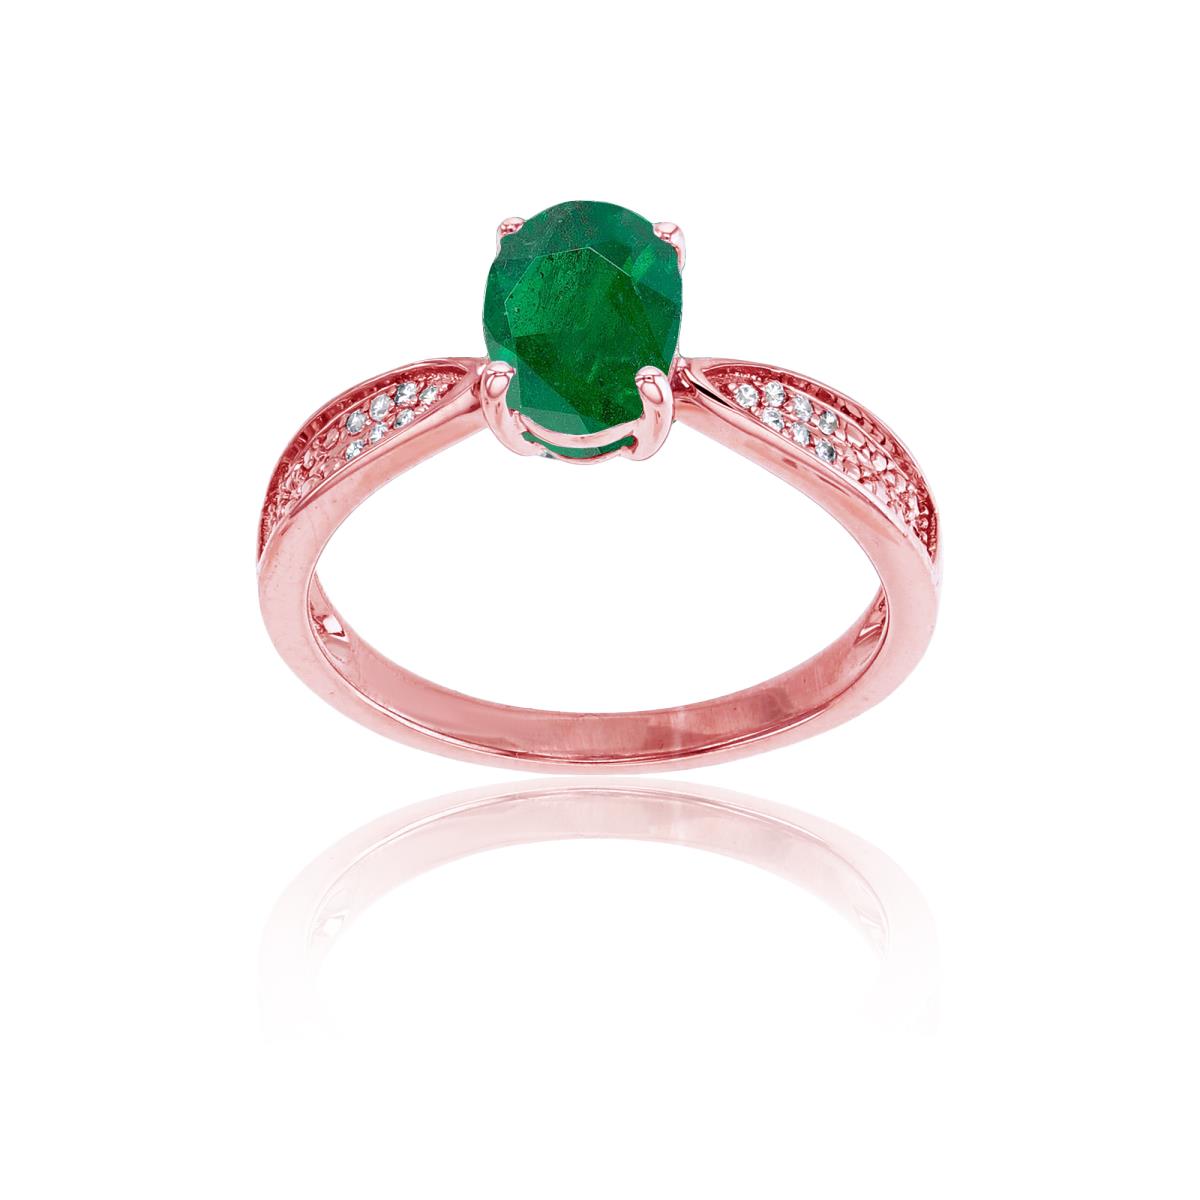 14K Rose Gold 0.05 CTTW Rnd Diamonds & 8x6mm Oval Emerald Center Ring